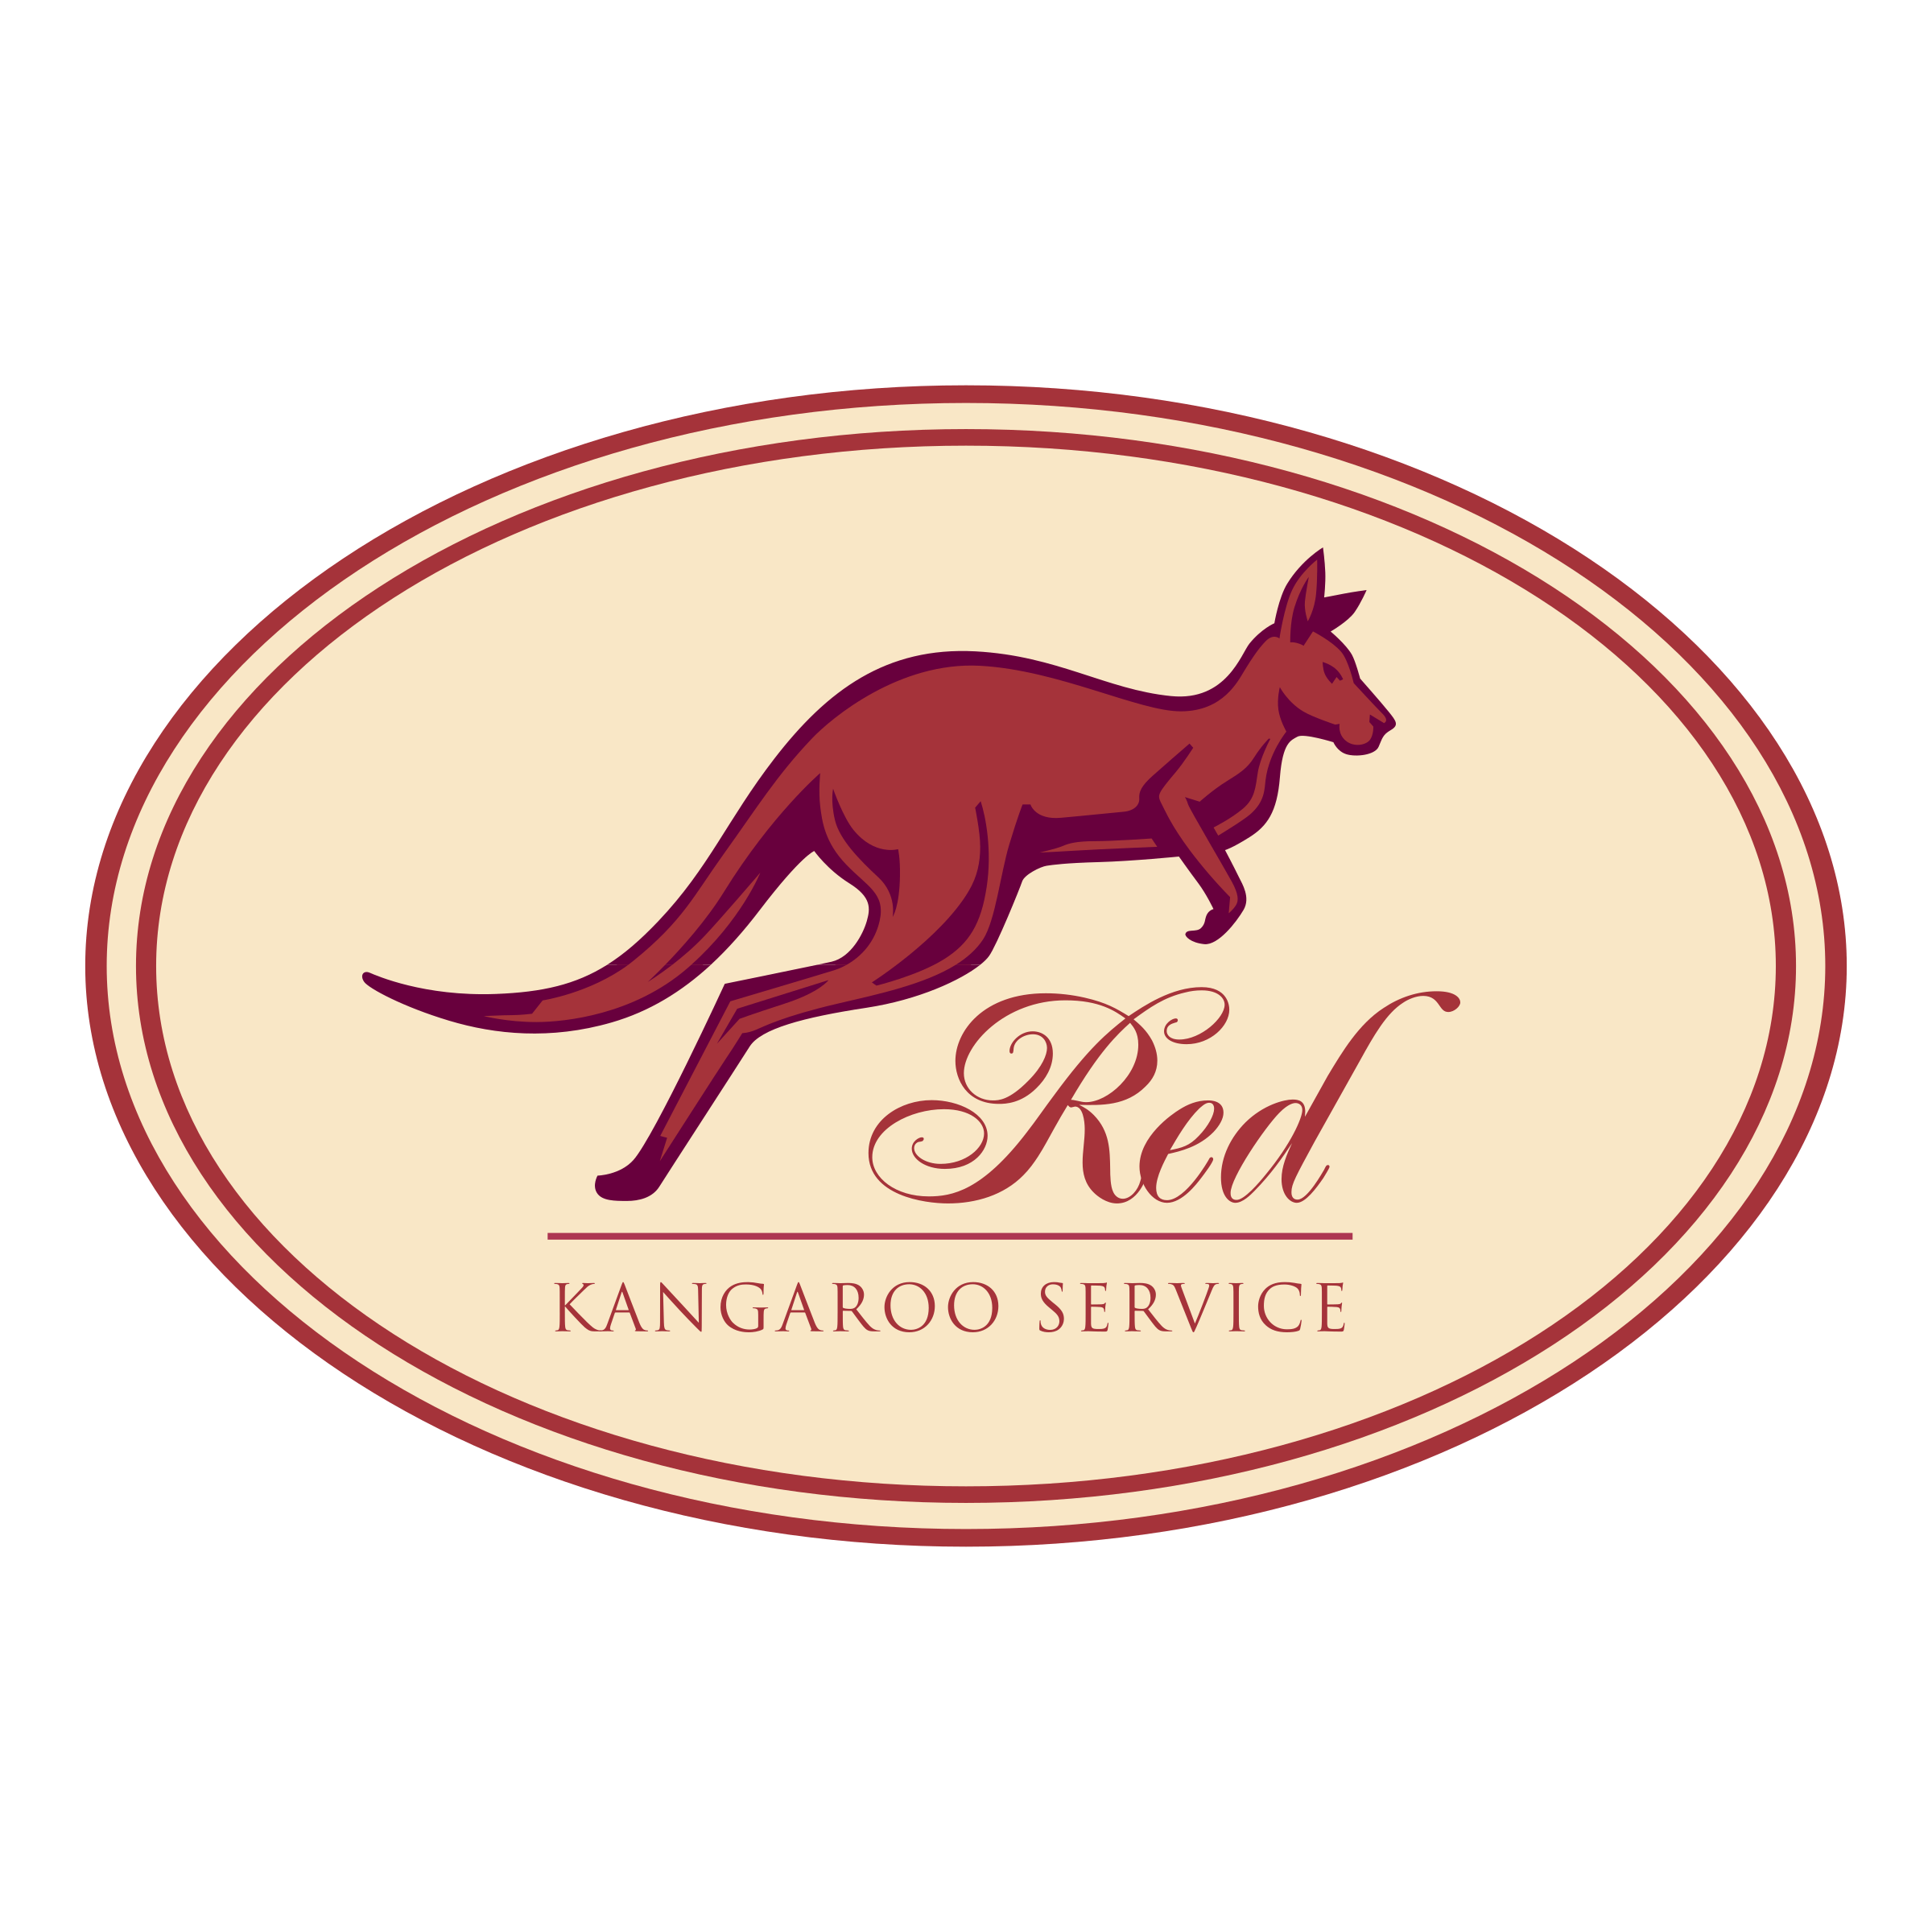 Red Kangaroo Logo - Red Kangaroo Service Logo PNG Transparent & SVG Vector